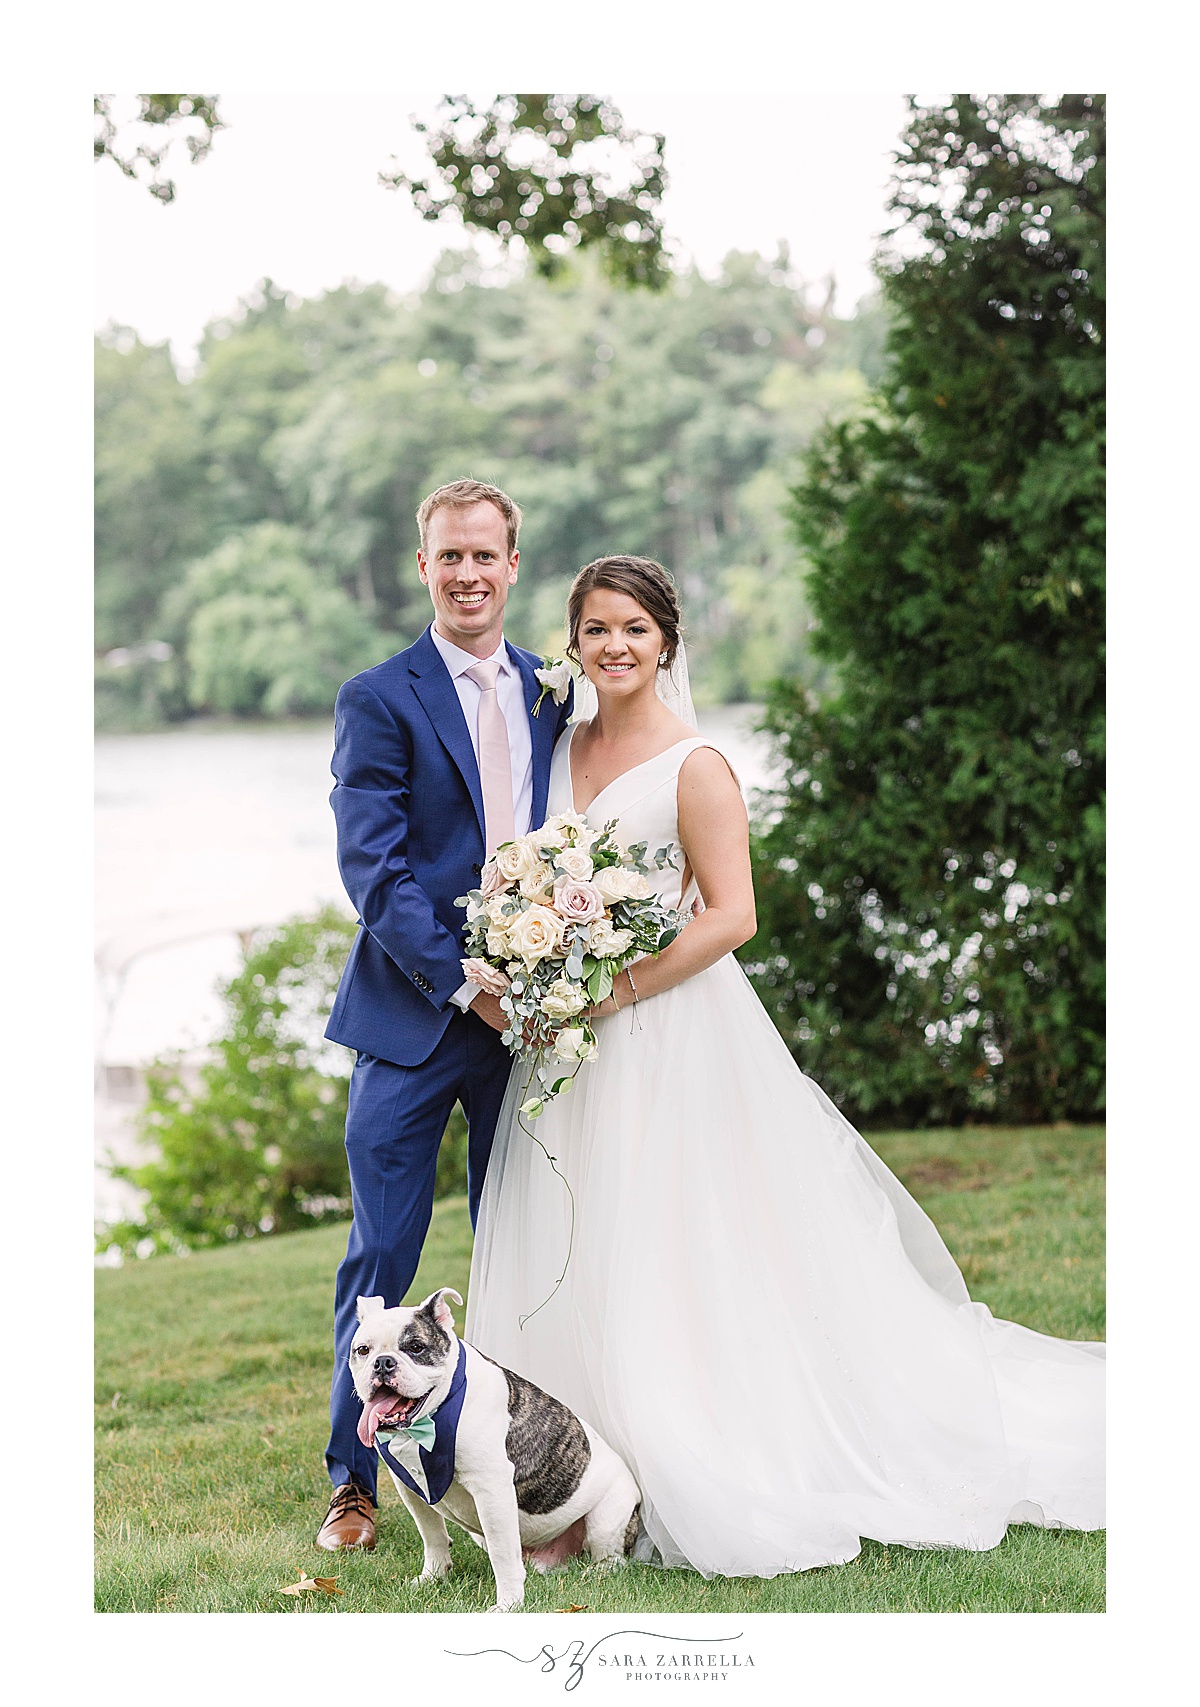 newlyweds pose with dog after Rhode Island wedding